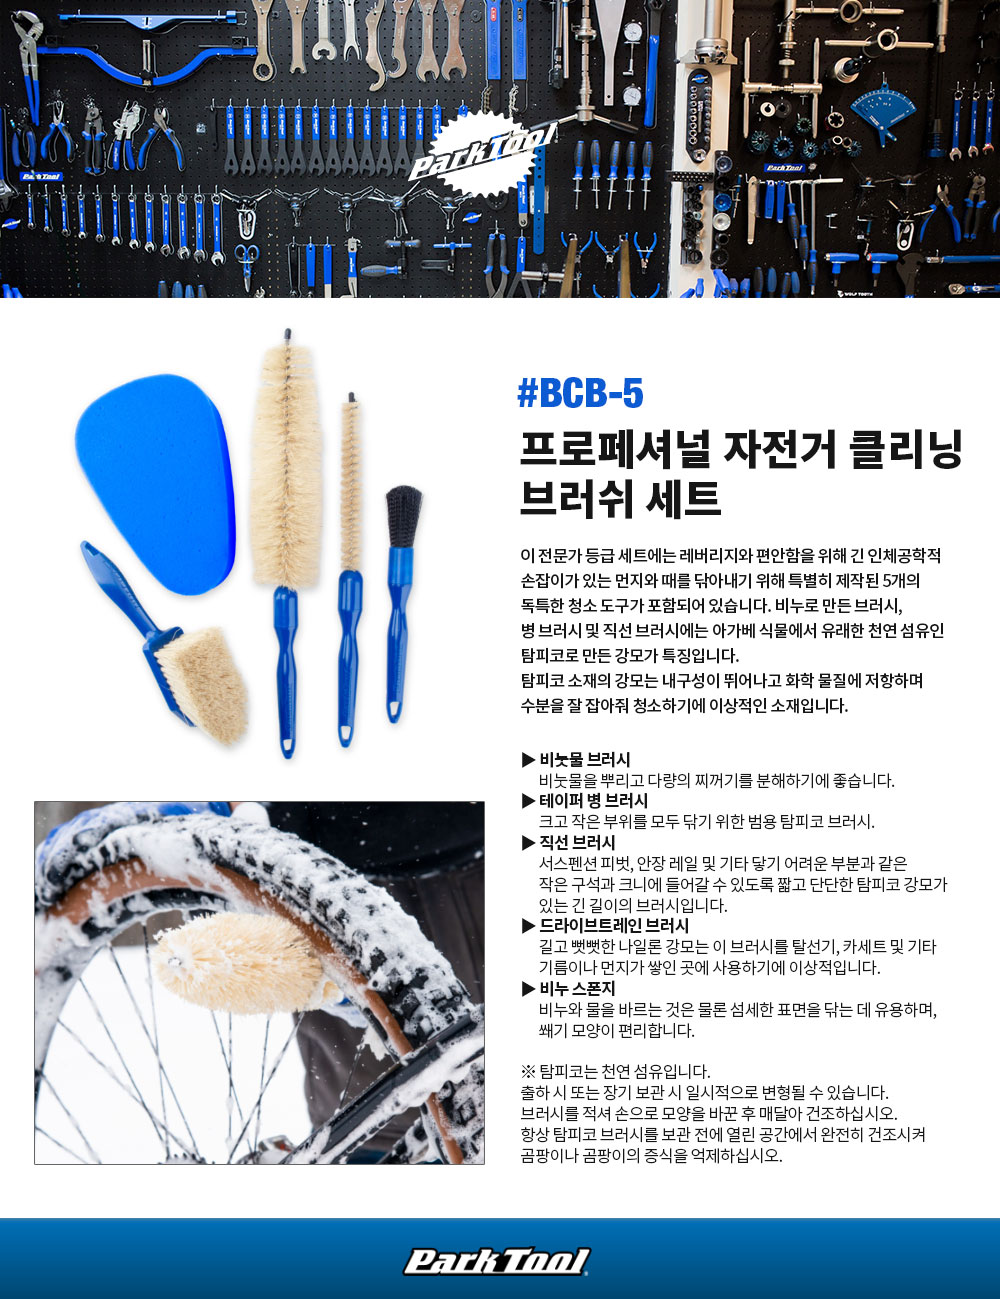 Park Tool BCB-5 Professional Bike Cleaning Brush Set